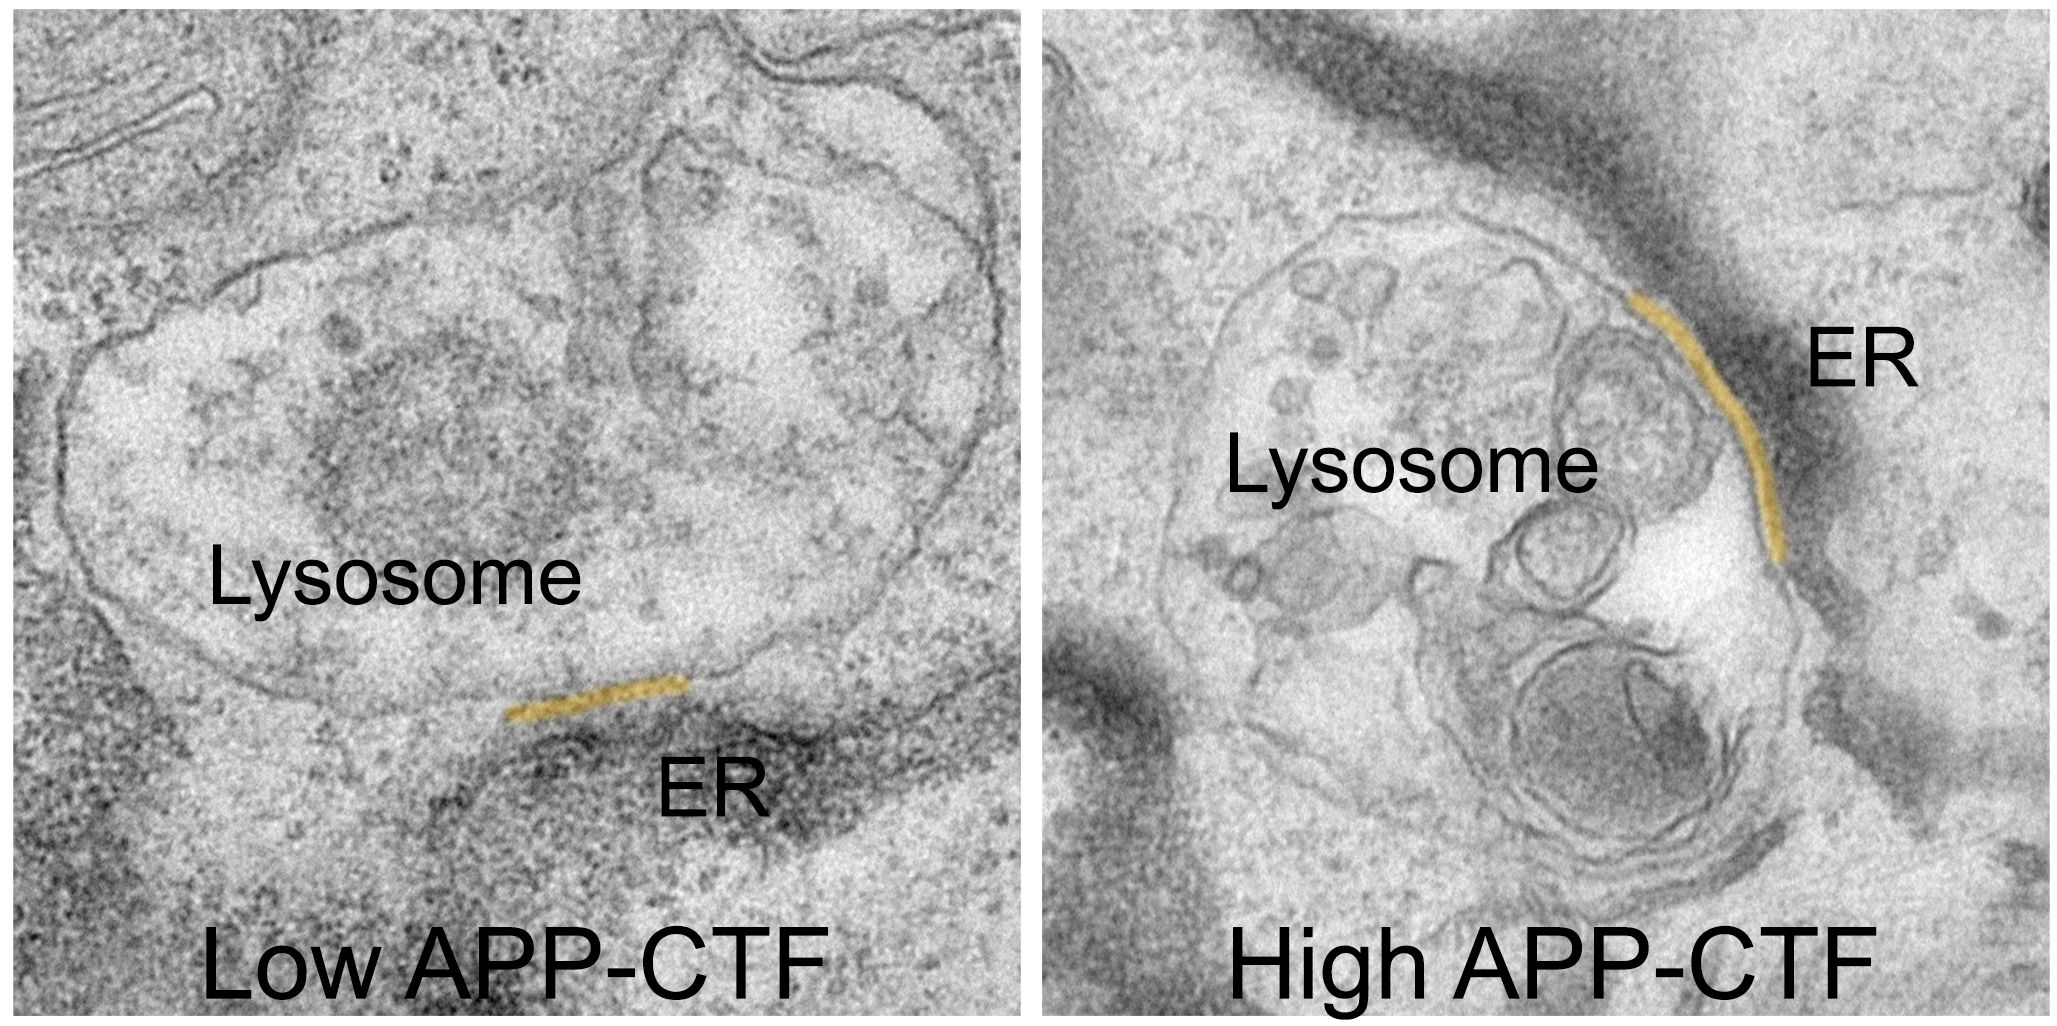 APP-C-Terminal Fragments (APP-CTFs) accumulate between the endoplasmic reticulum and the lysosomes